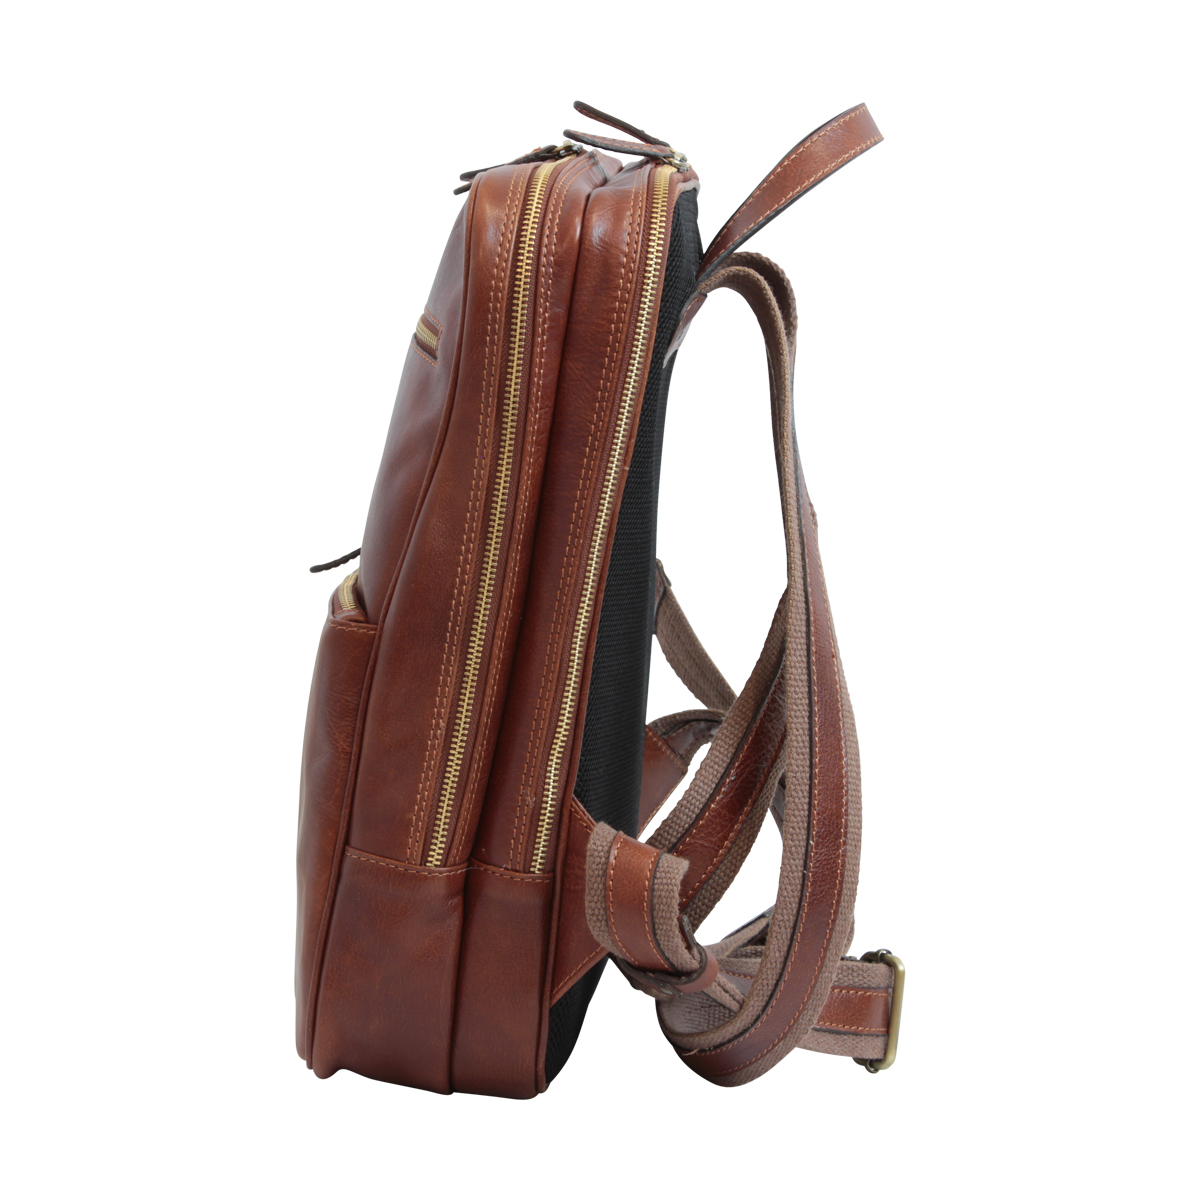 Leather backpack  413689MA | 413689MA US | Old Angler Firenze